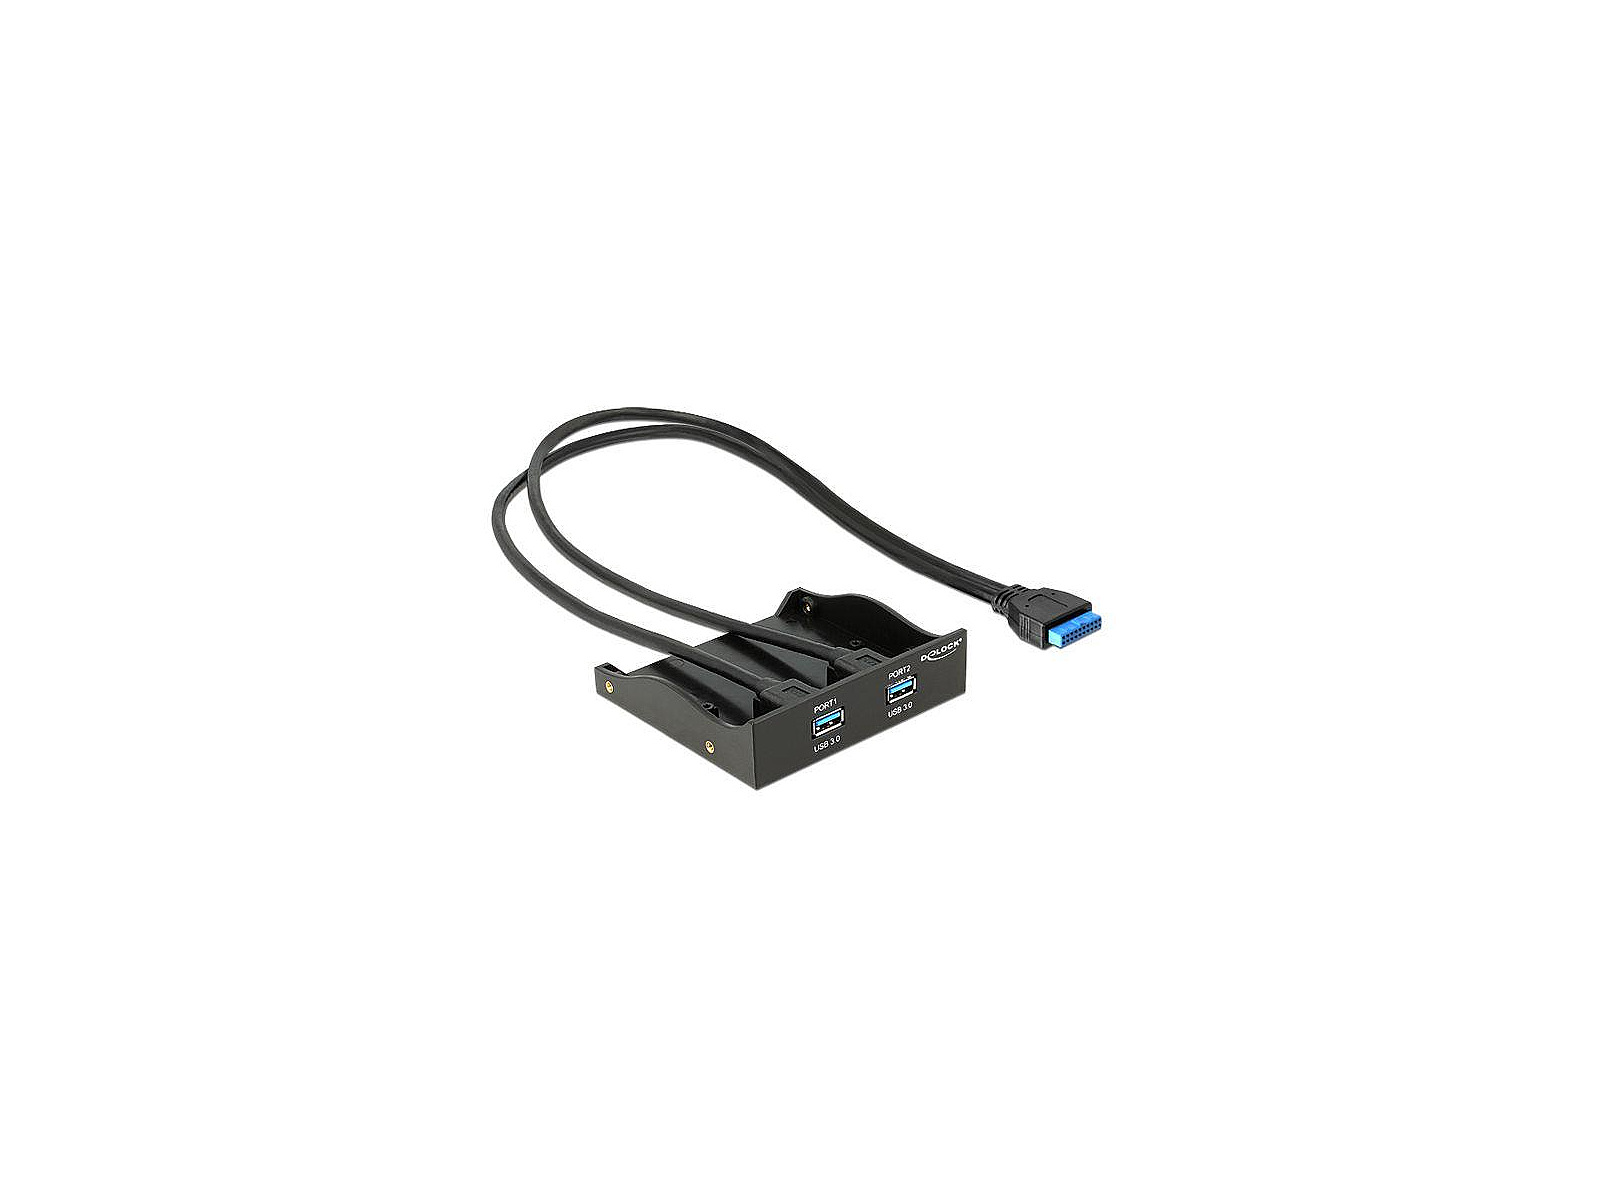 Delock USB 3.0 Front Panel 2-Port with internal 19 pin USB 3.0 PIN (61896)